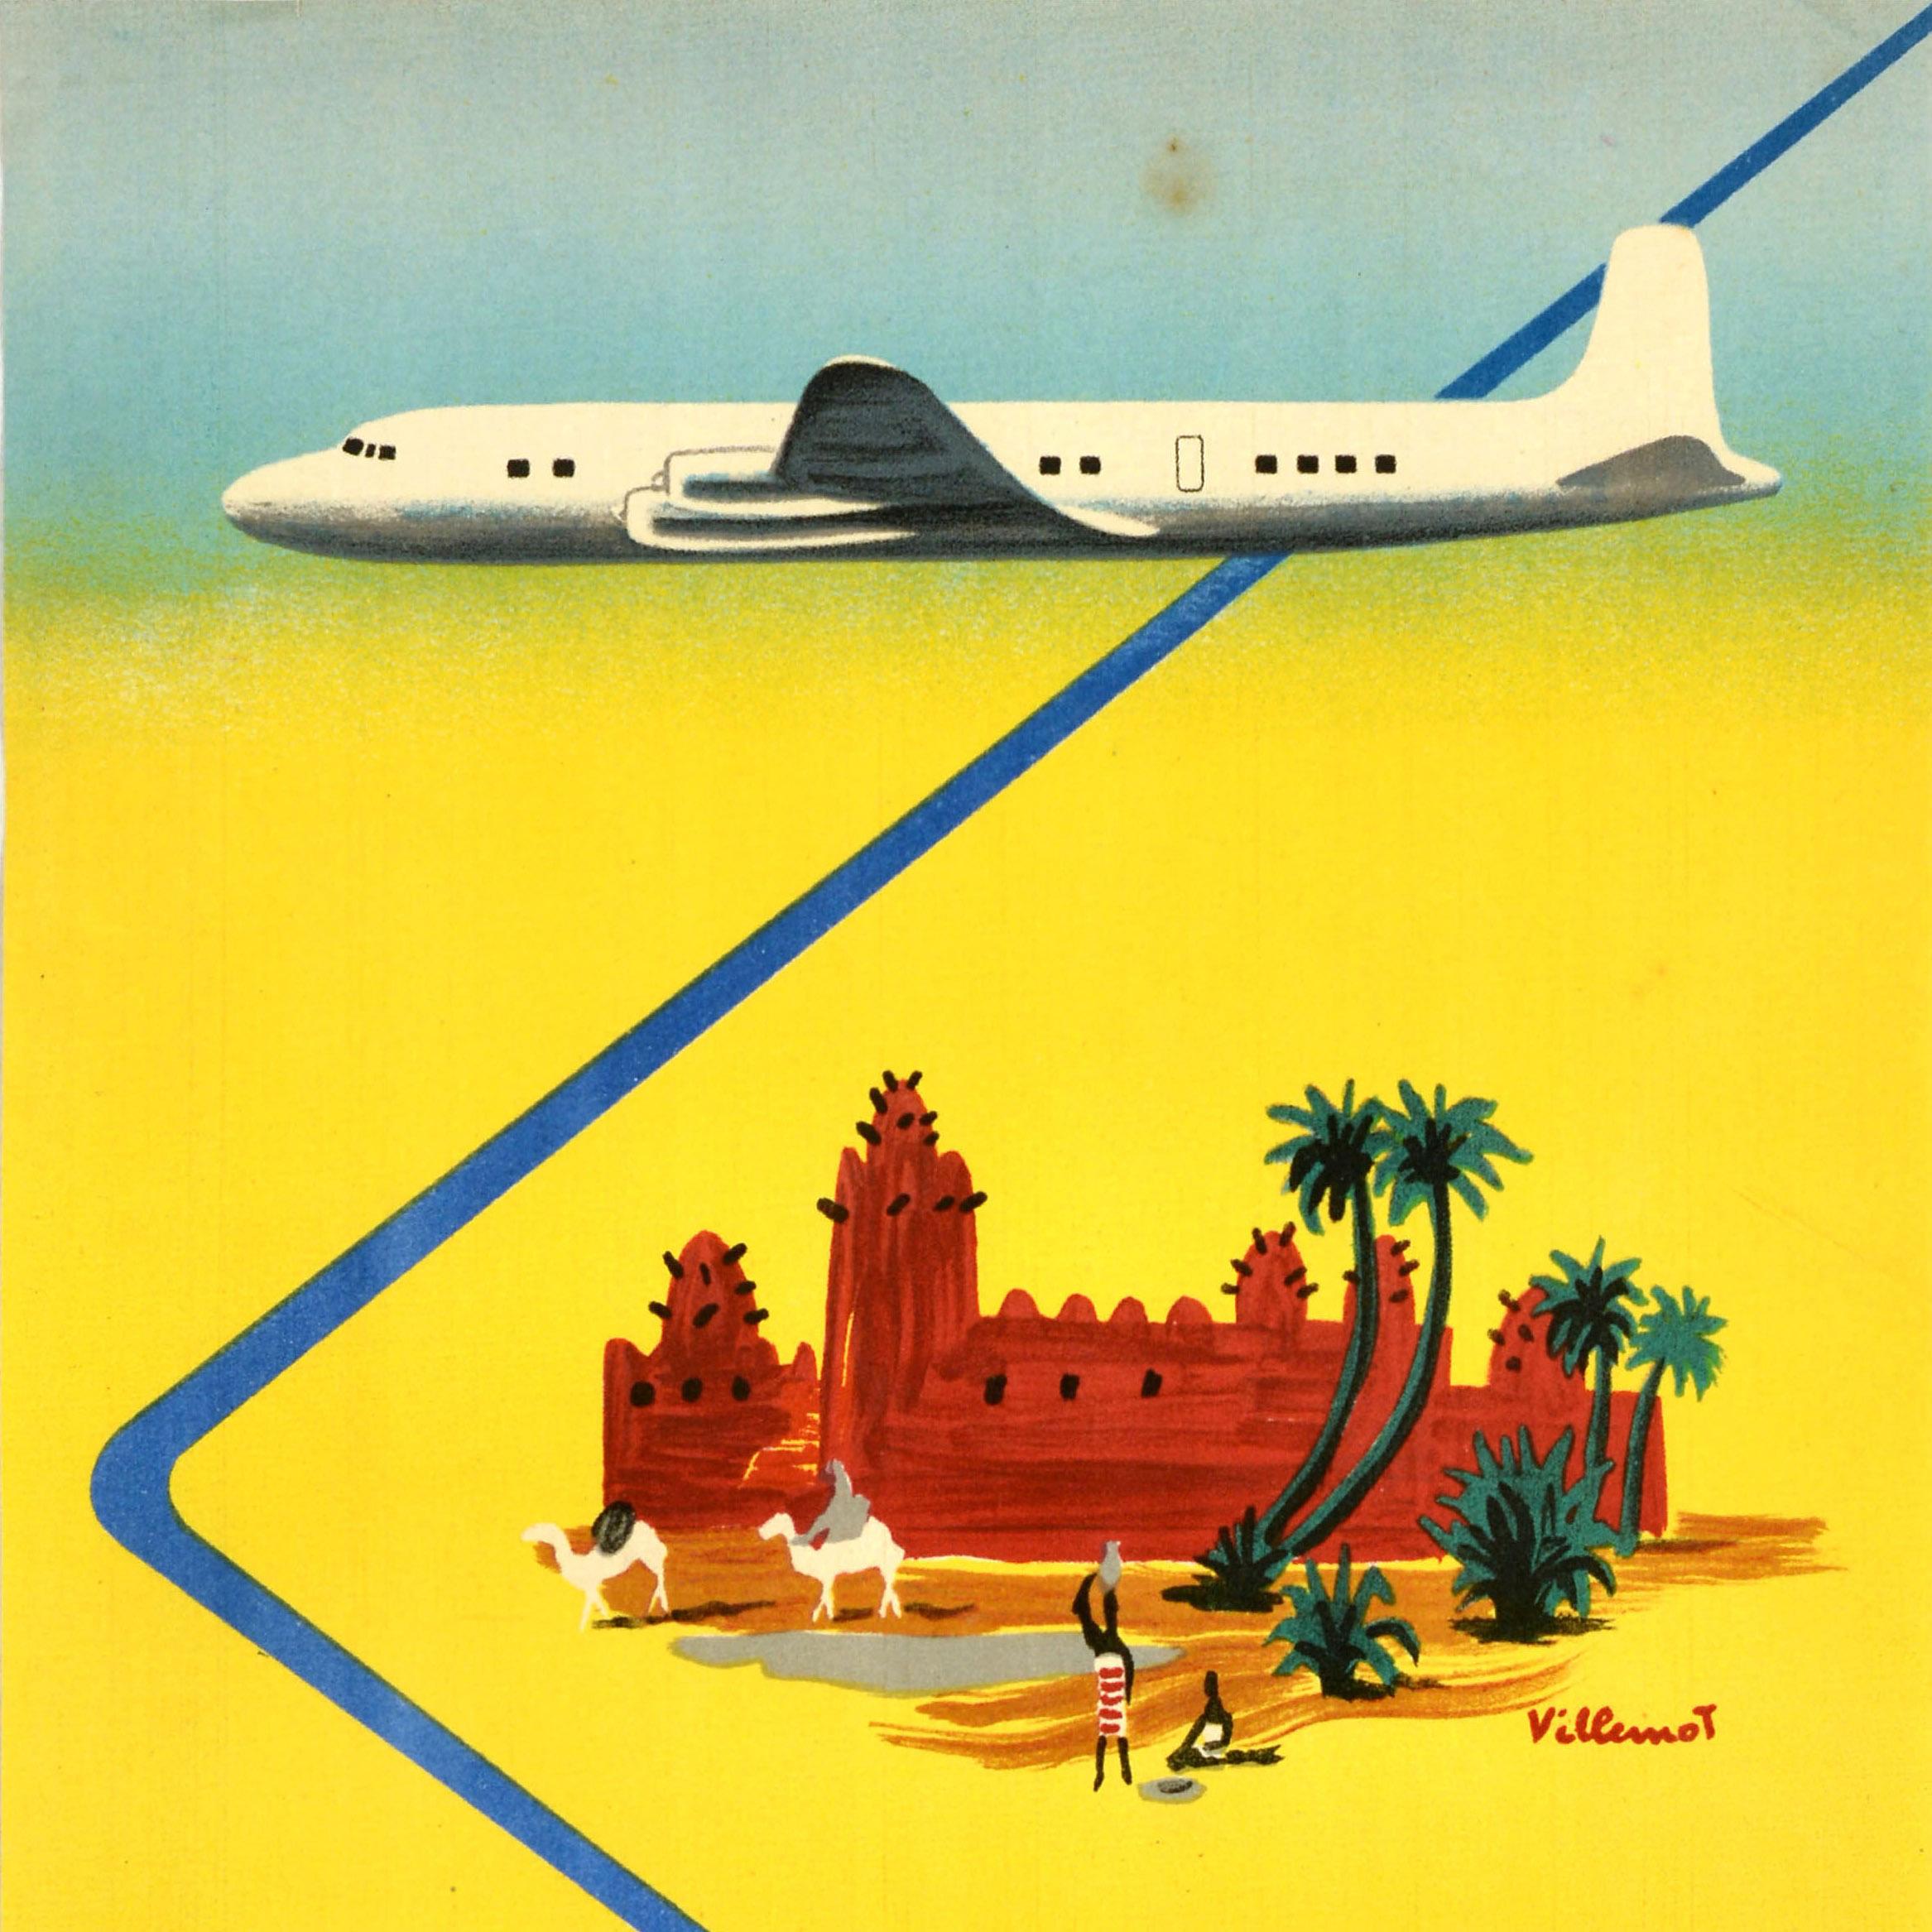 French Original Vintage Travel Poster TAI Afrique Noire Sub Sahara Africa Villemot Art For Sale